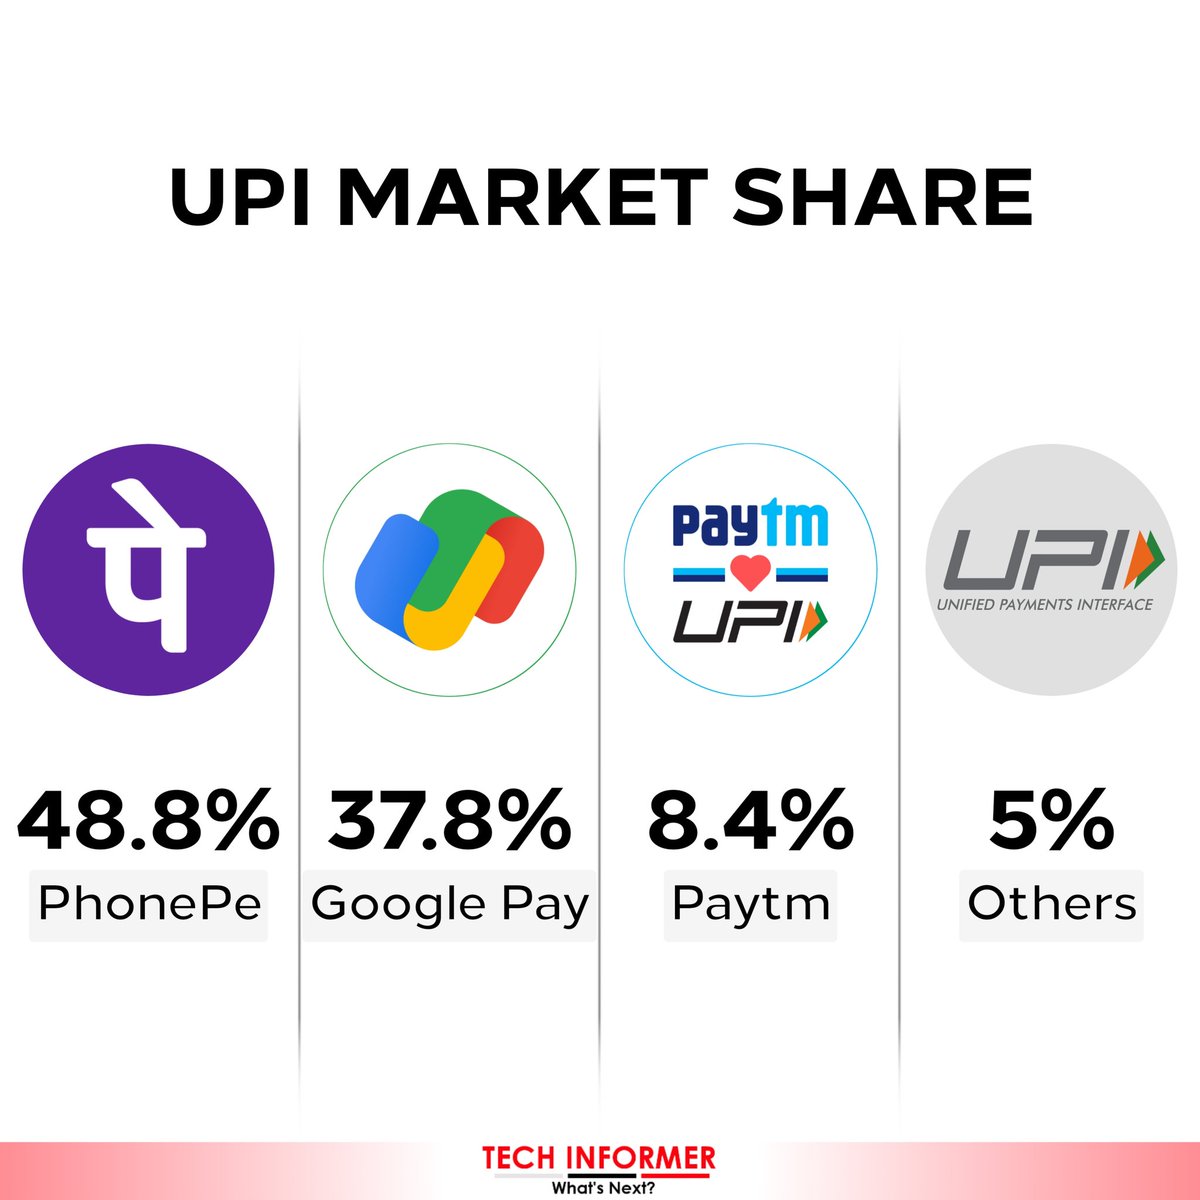 Paytm's UPI market share drops by 5 percentage points in 1 year
#Techinformer #UPI #GooglePay #PhonePe #Paytm